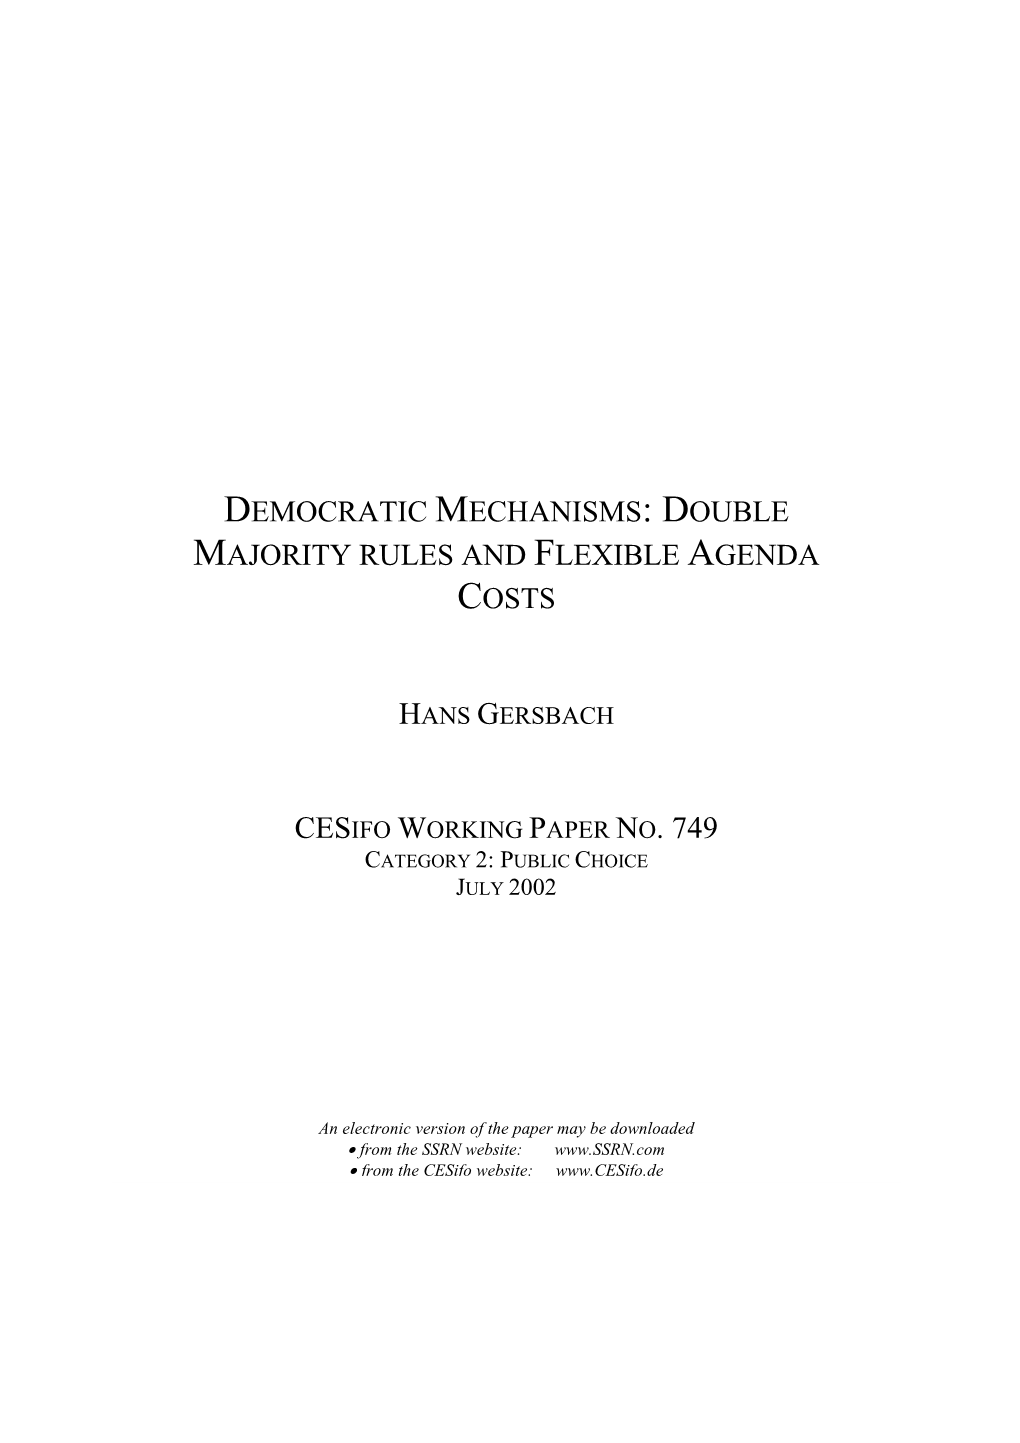 Democratic Mechanisms: Double Majority Rules and Flexible Agenda Costs